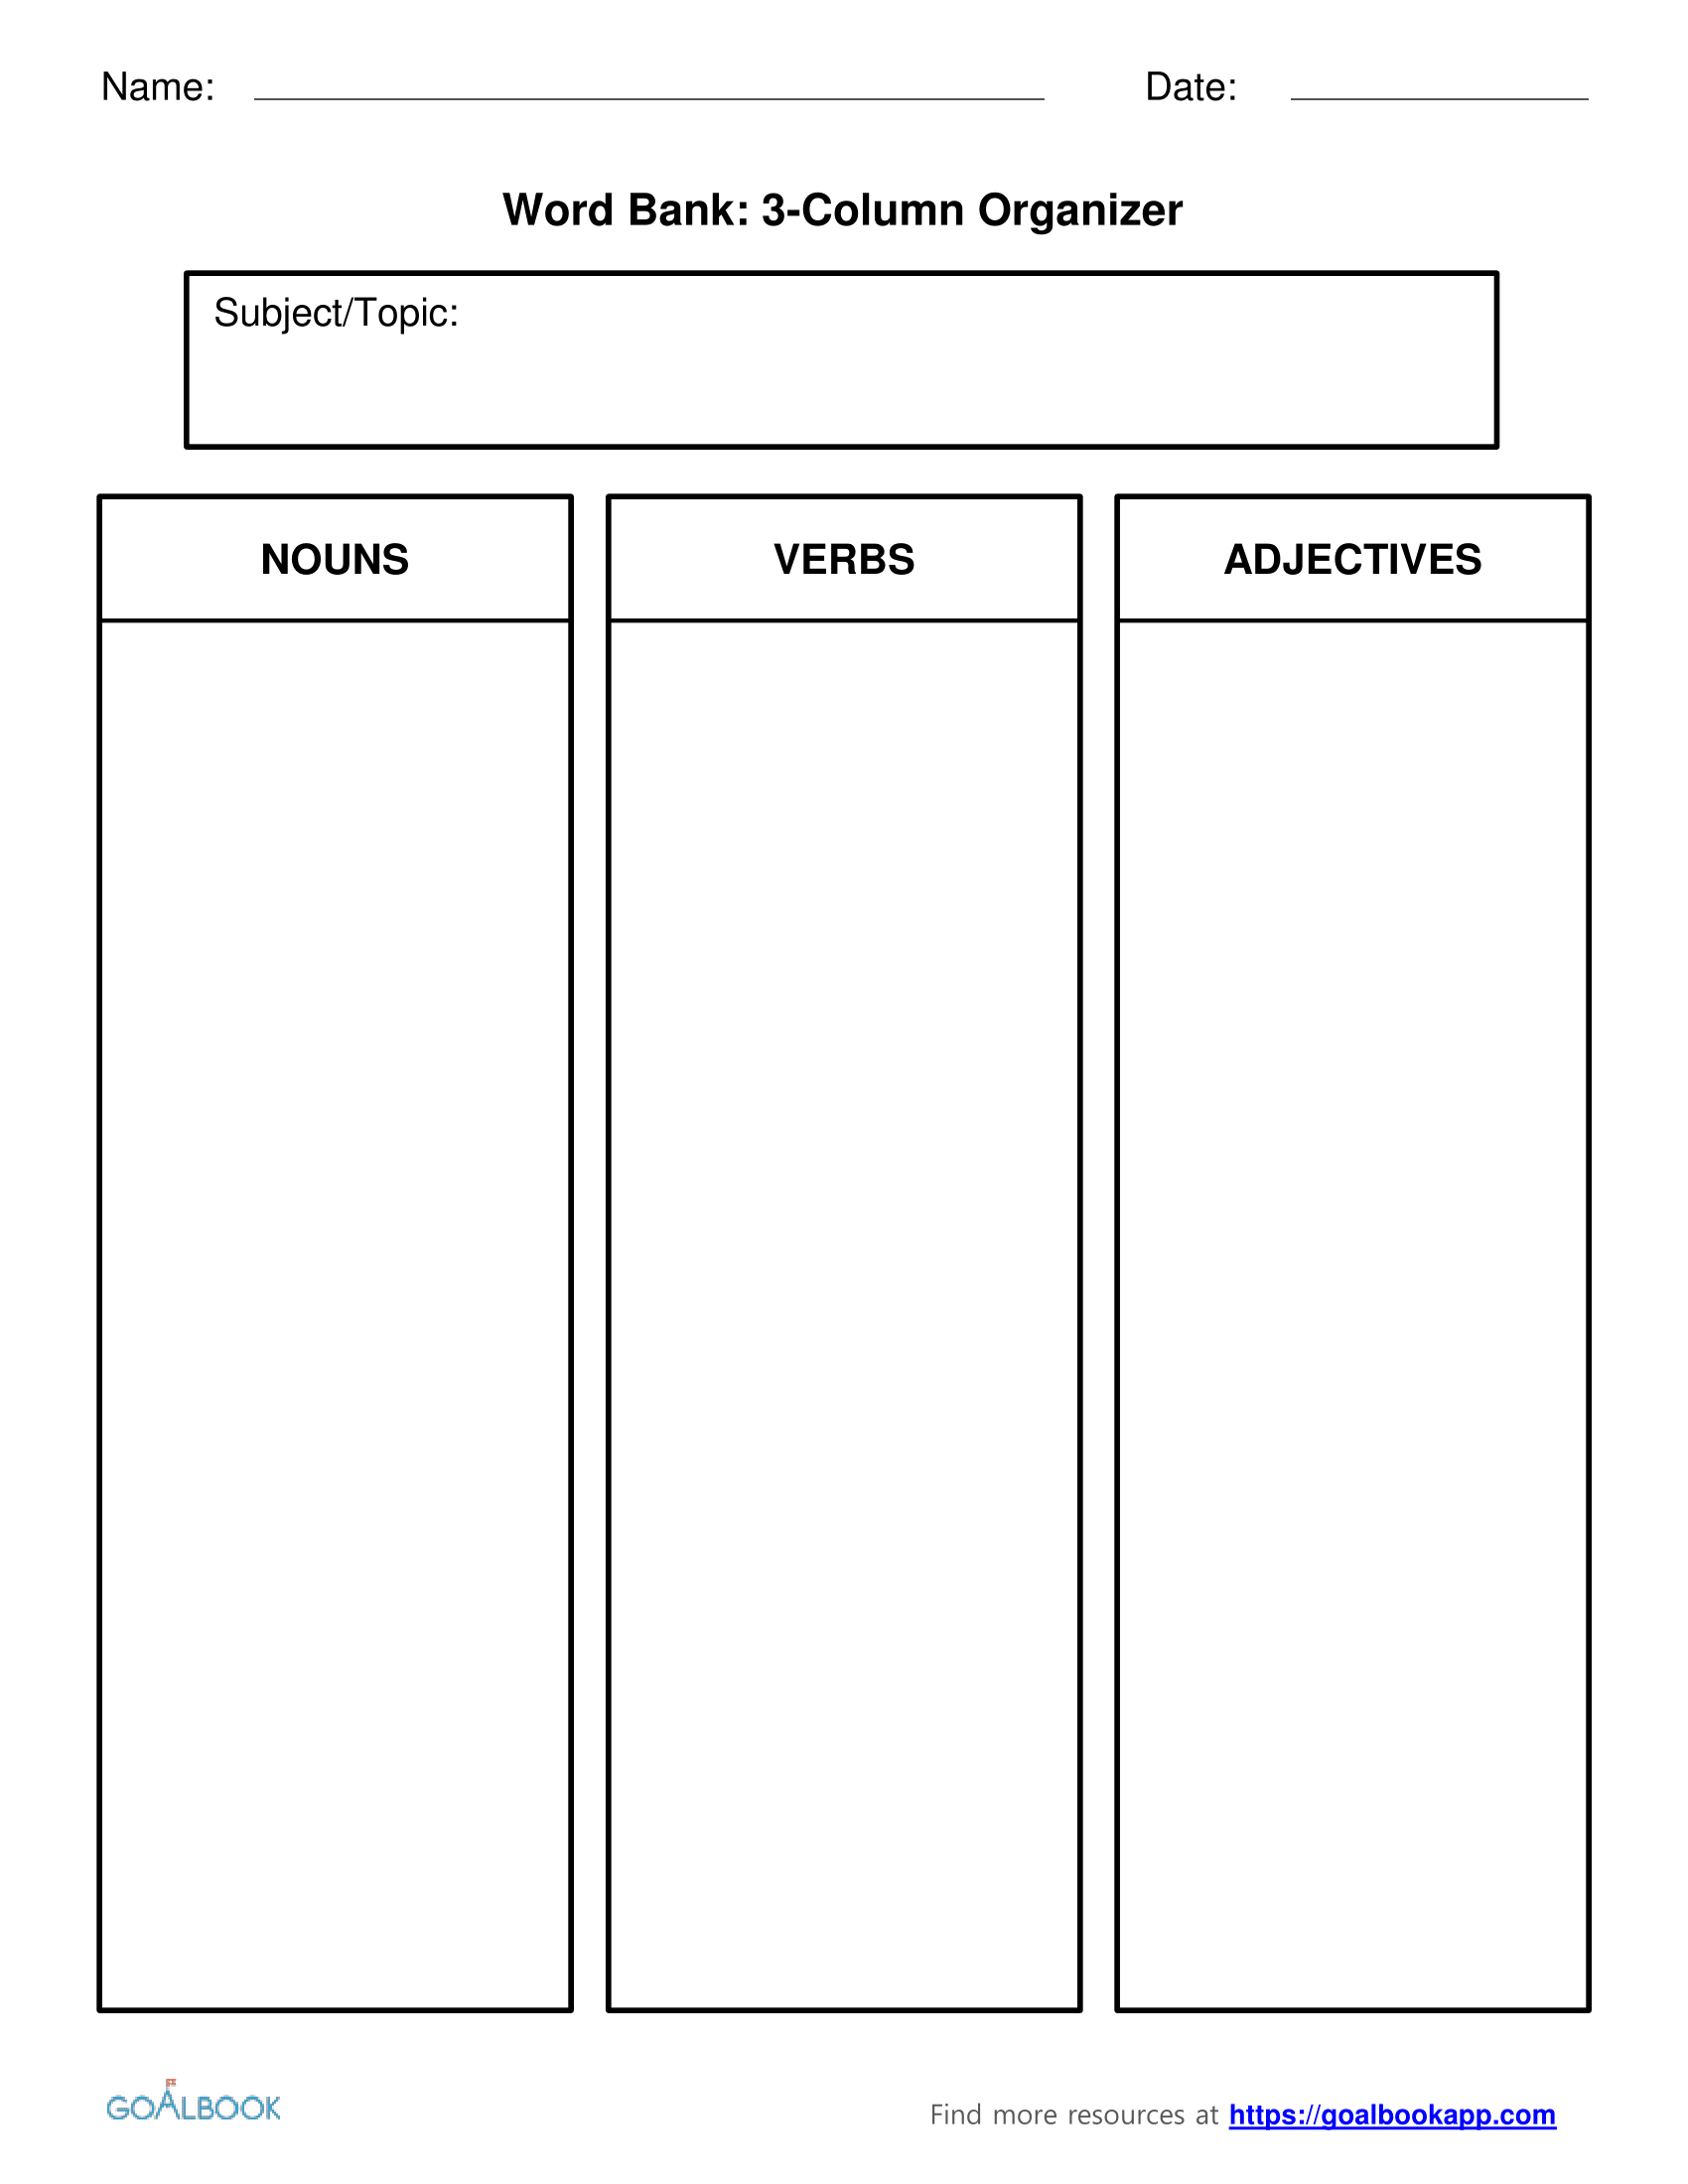 Word Bank | Udl Strategies - Goalbook Toolkit Within 3 Column Word Template